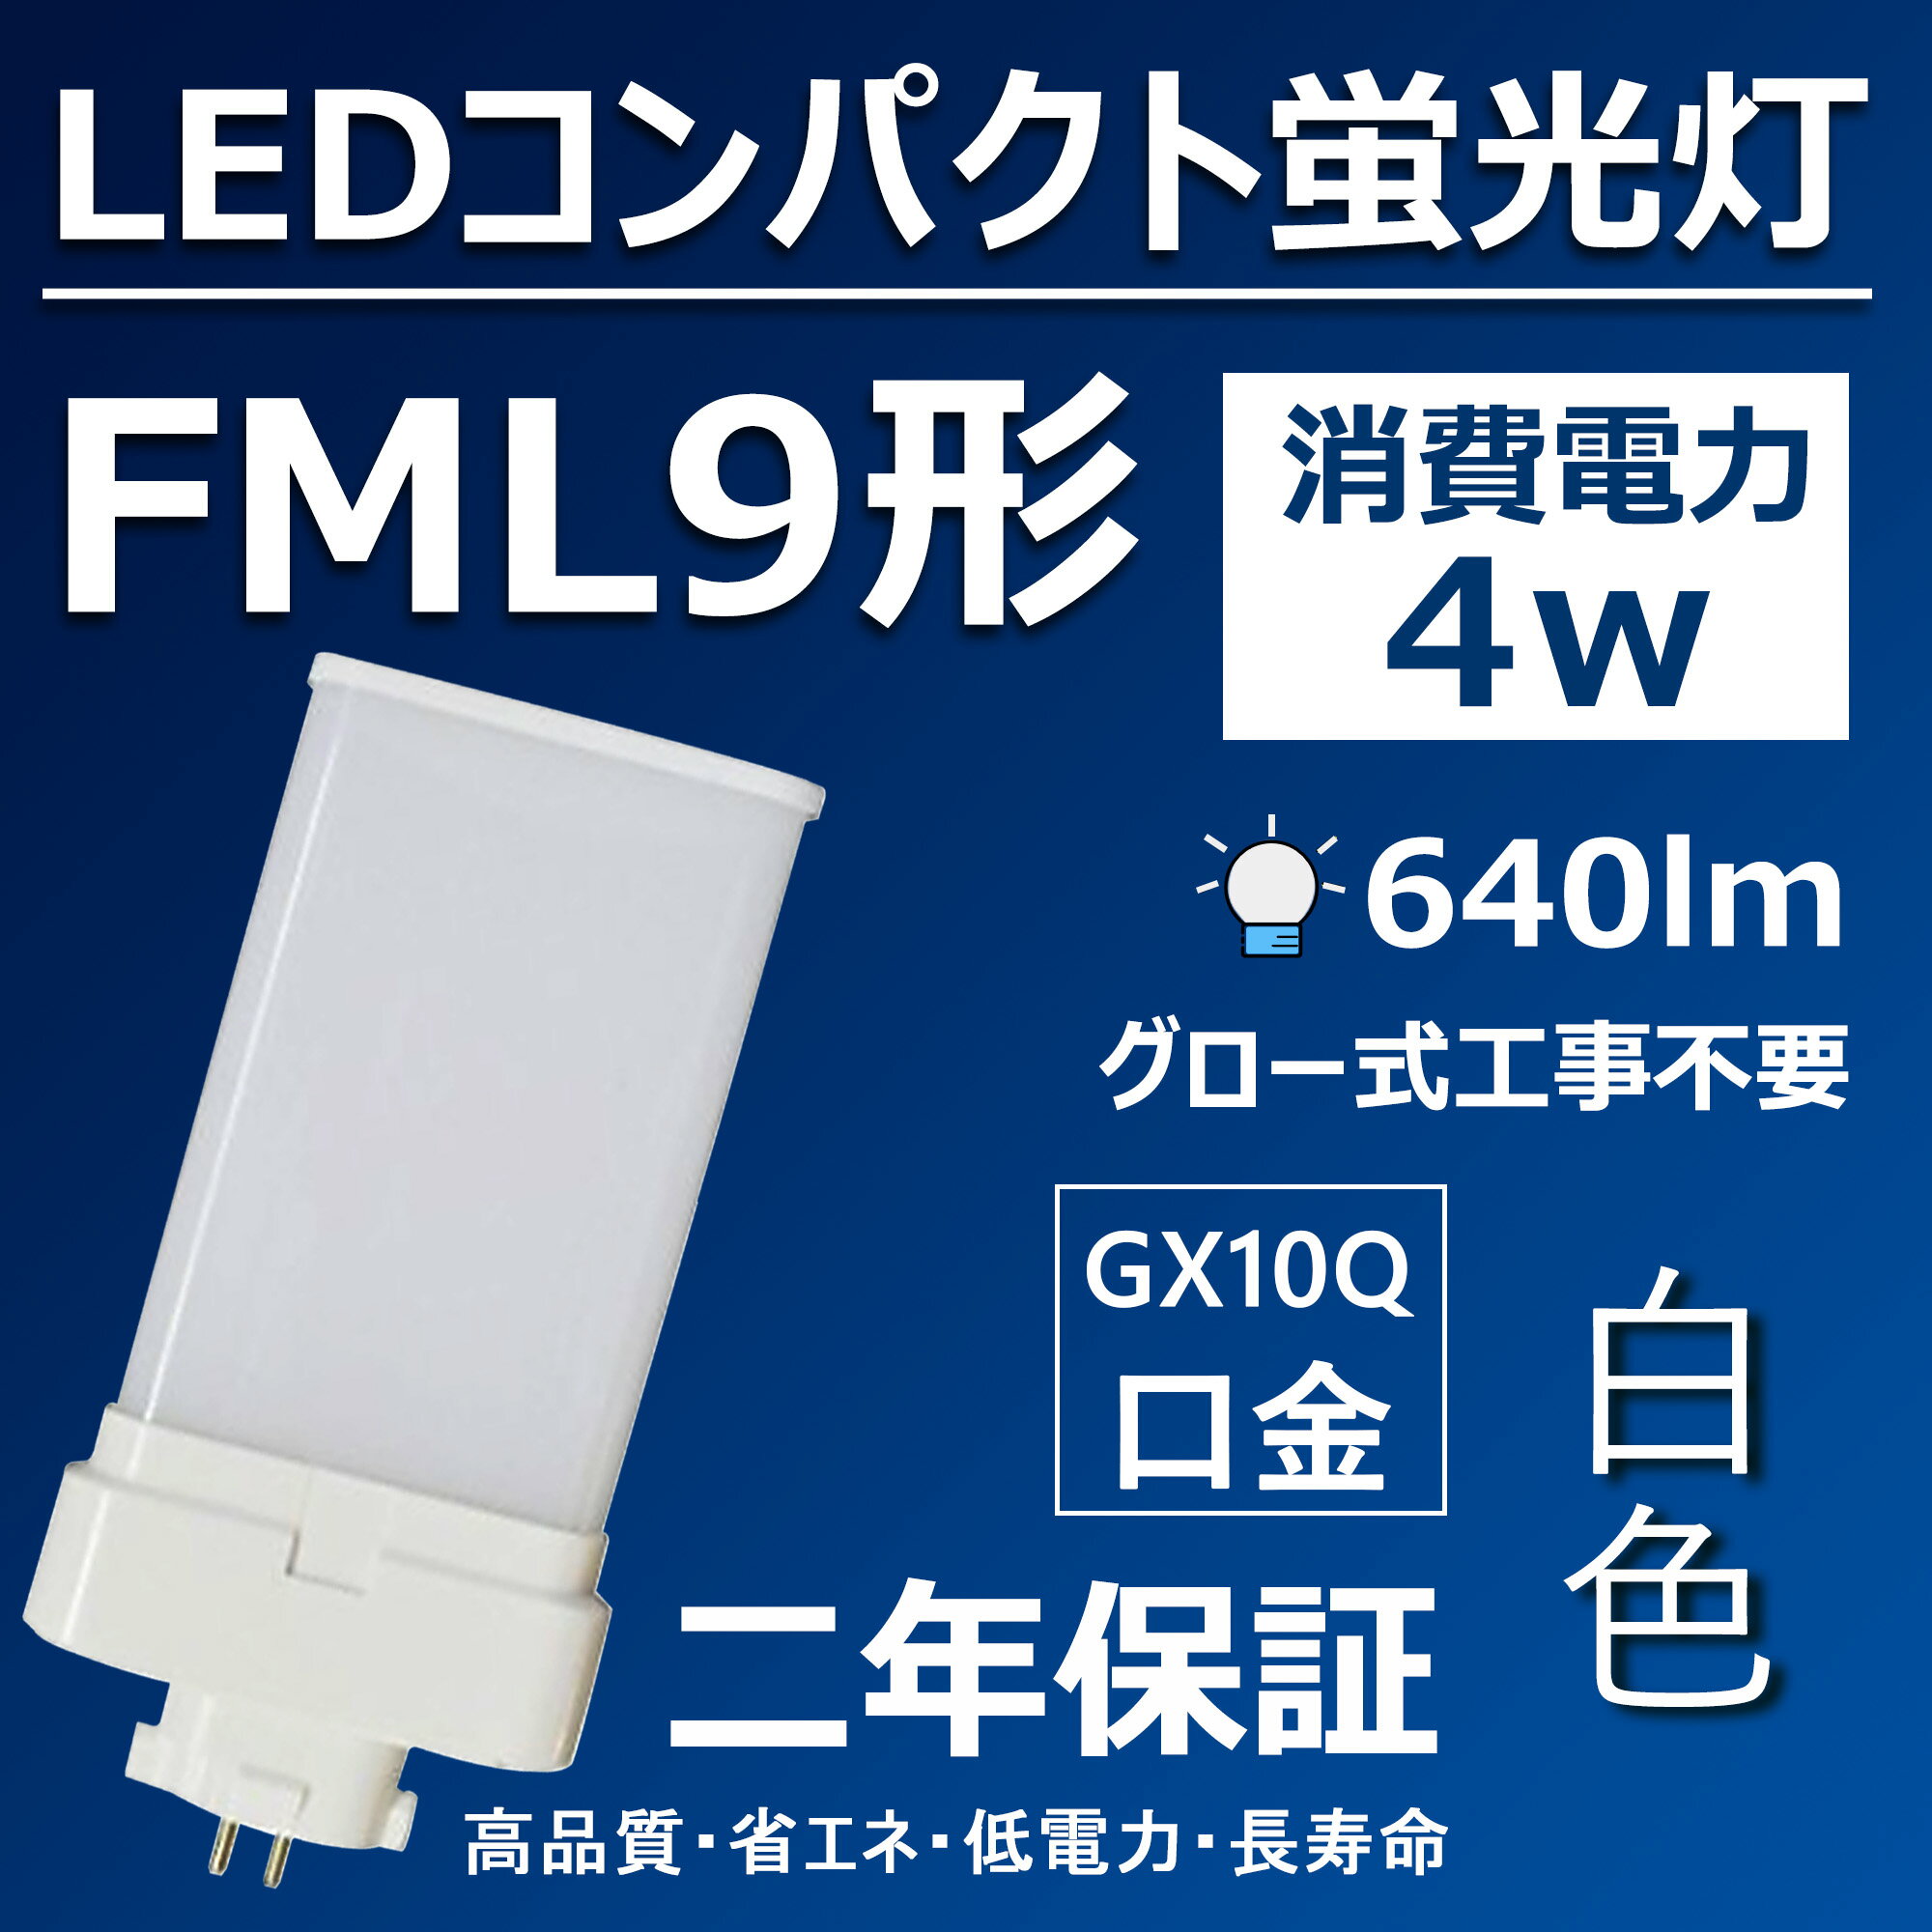 LEDRpNgu FML9` LEDu GX10Q fml9 fml9ex LED 4w 640lm LEDuv fml9ex-l fml9ex-w fml9ex-n fml9ex-d VƖ ledd ledƖ  cCuyFz